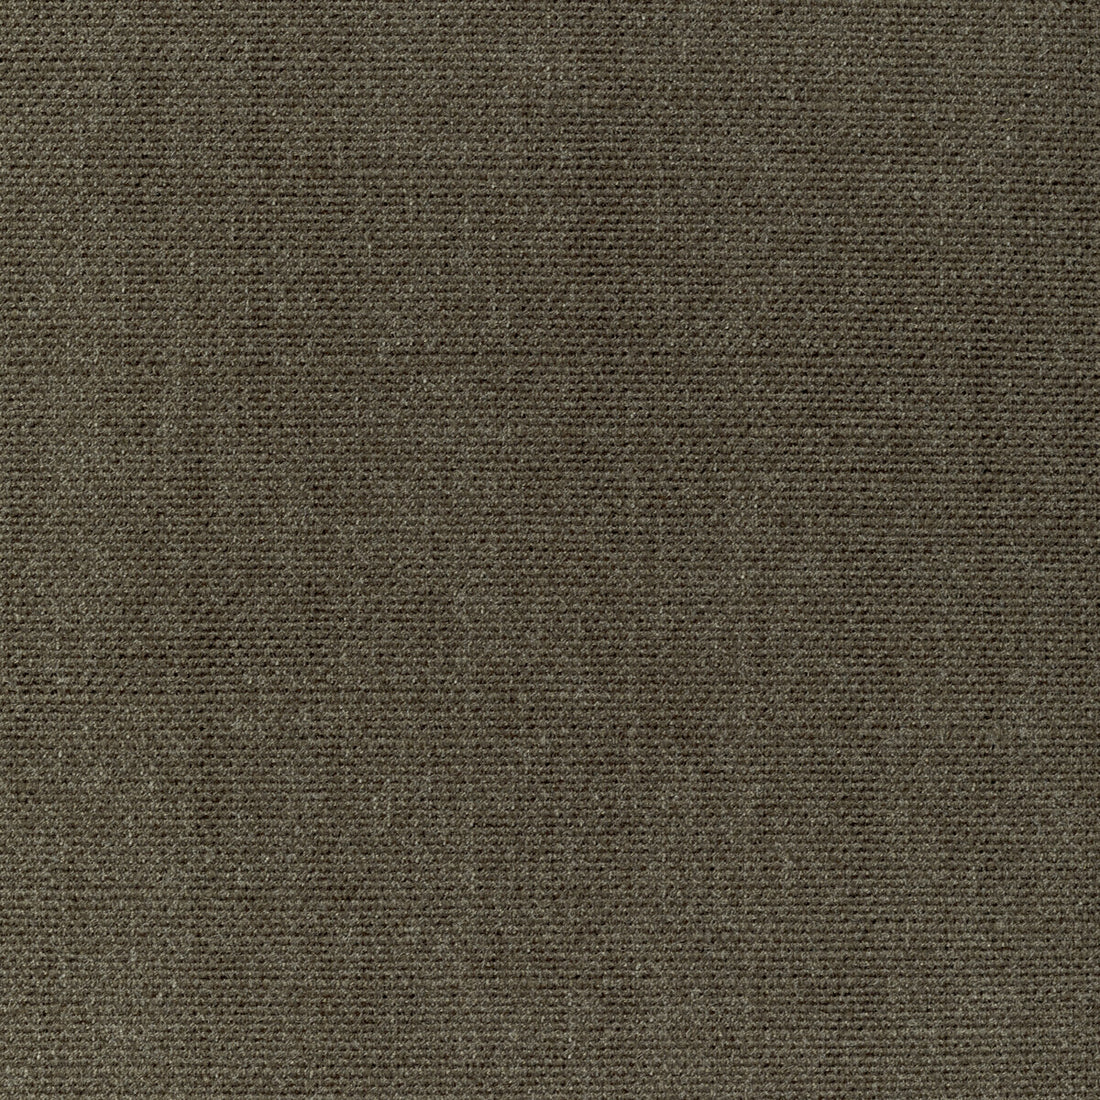 Kravet Smart fabric in 36112-311 color - pattern 36112.311.0 - by Kravet Smart in the Performance Kravetarmor collection